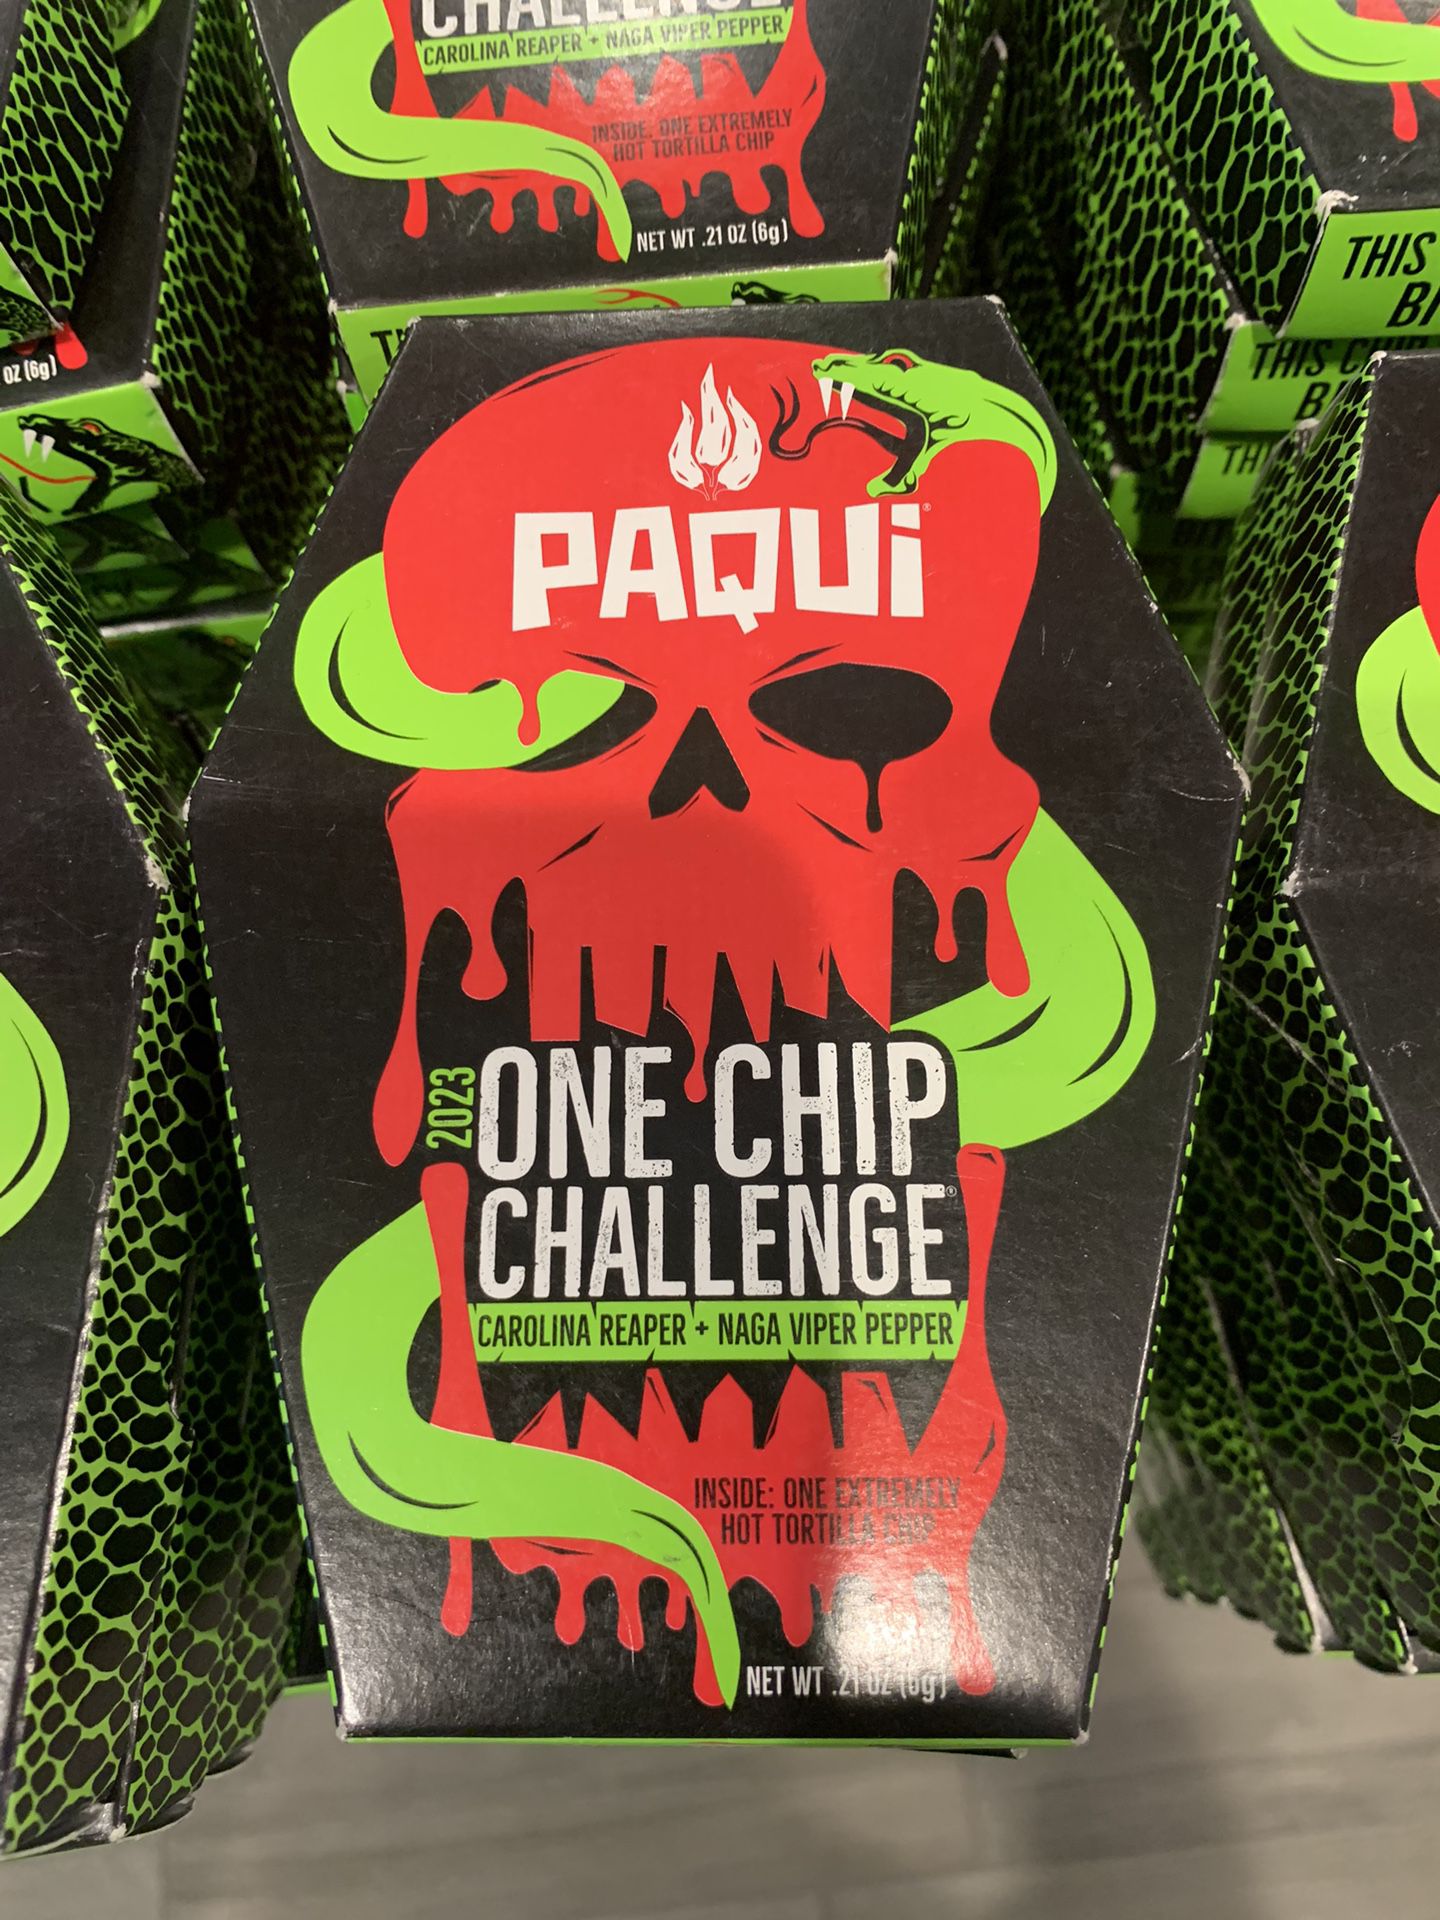 Paqui One Chip Challenge 